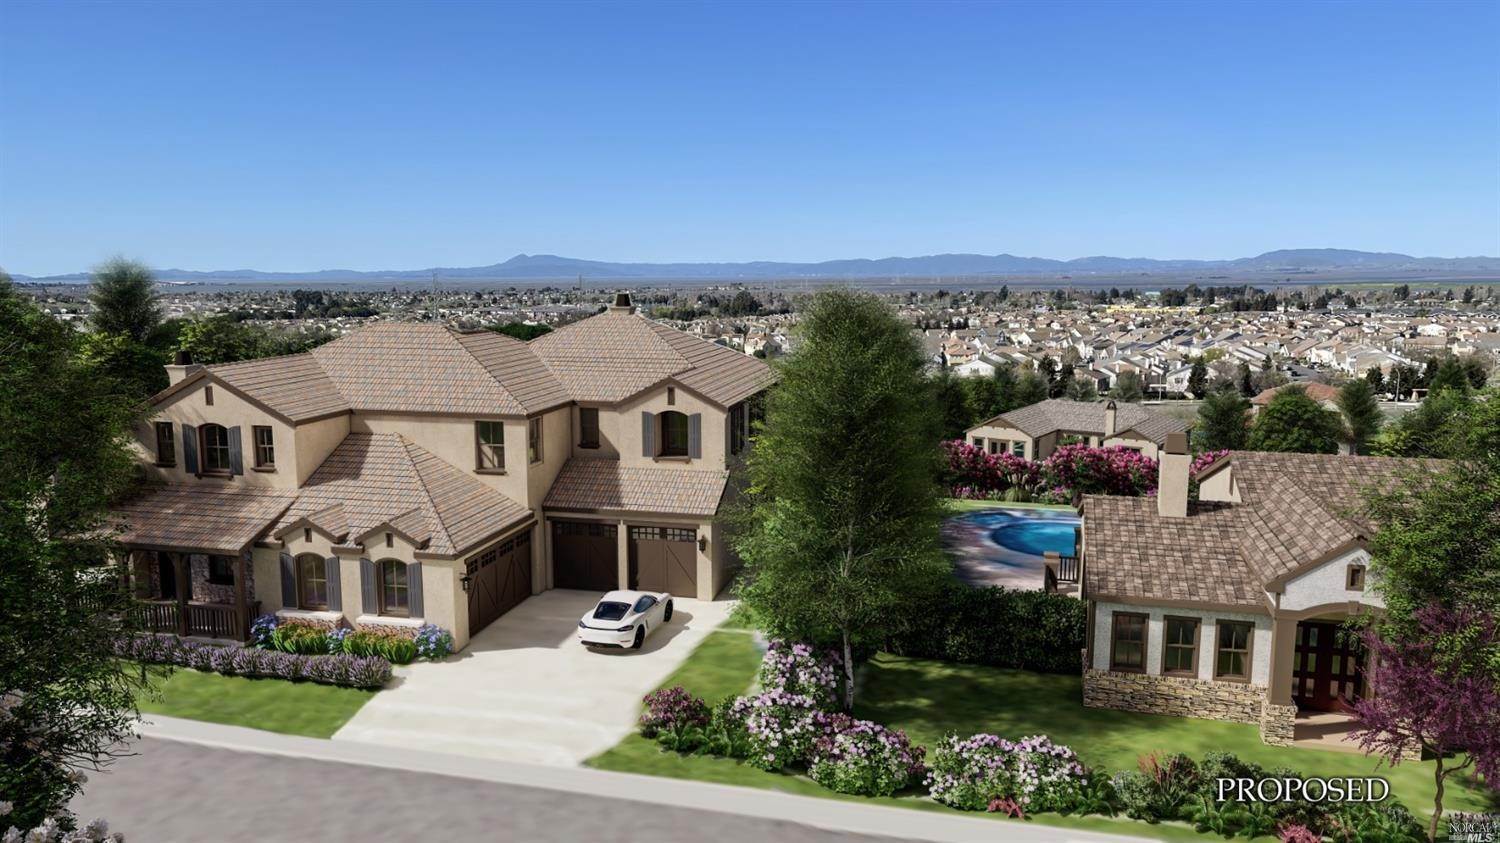 11. Land for Sale at 100 Canyon Estates Cir #Lot 1 American Canyon, California 94503 United States